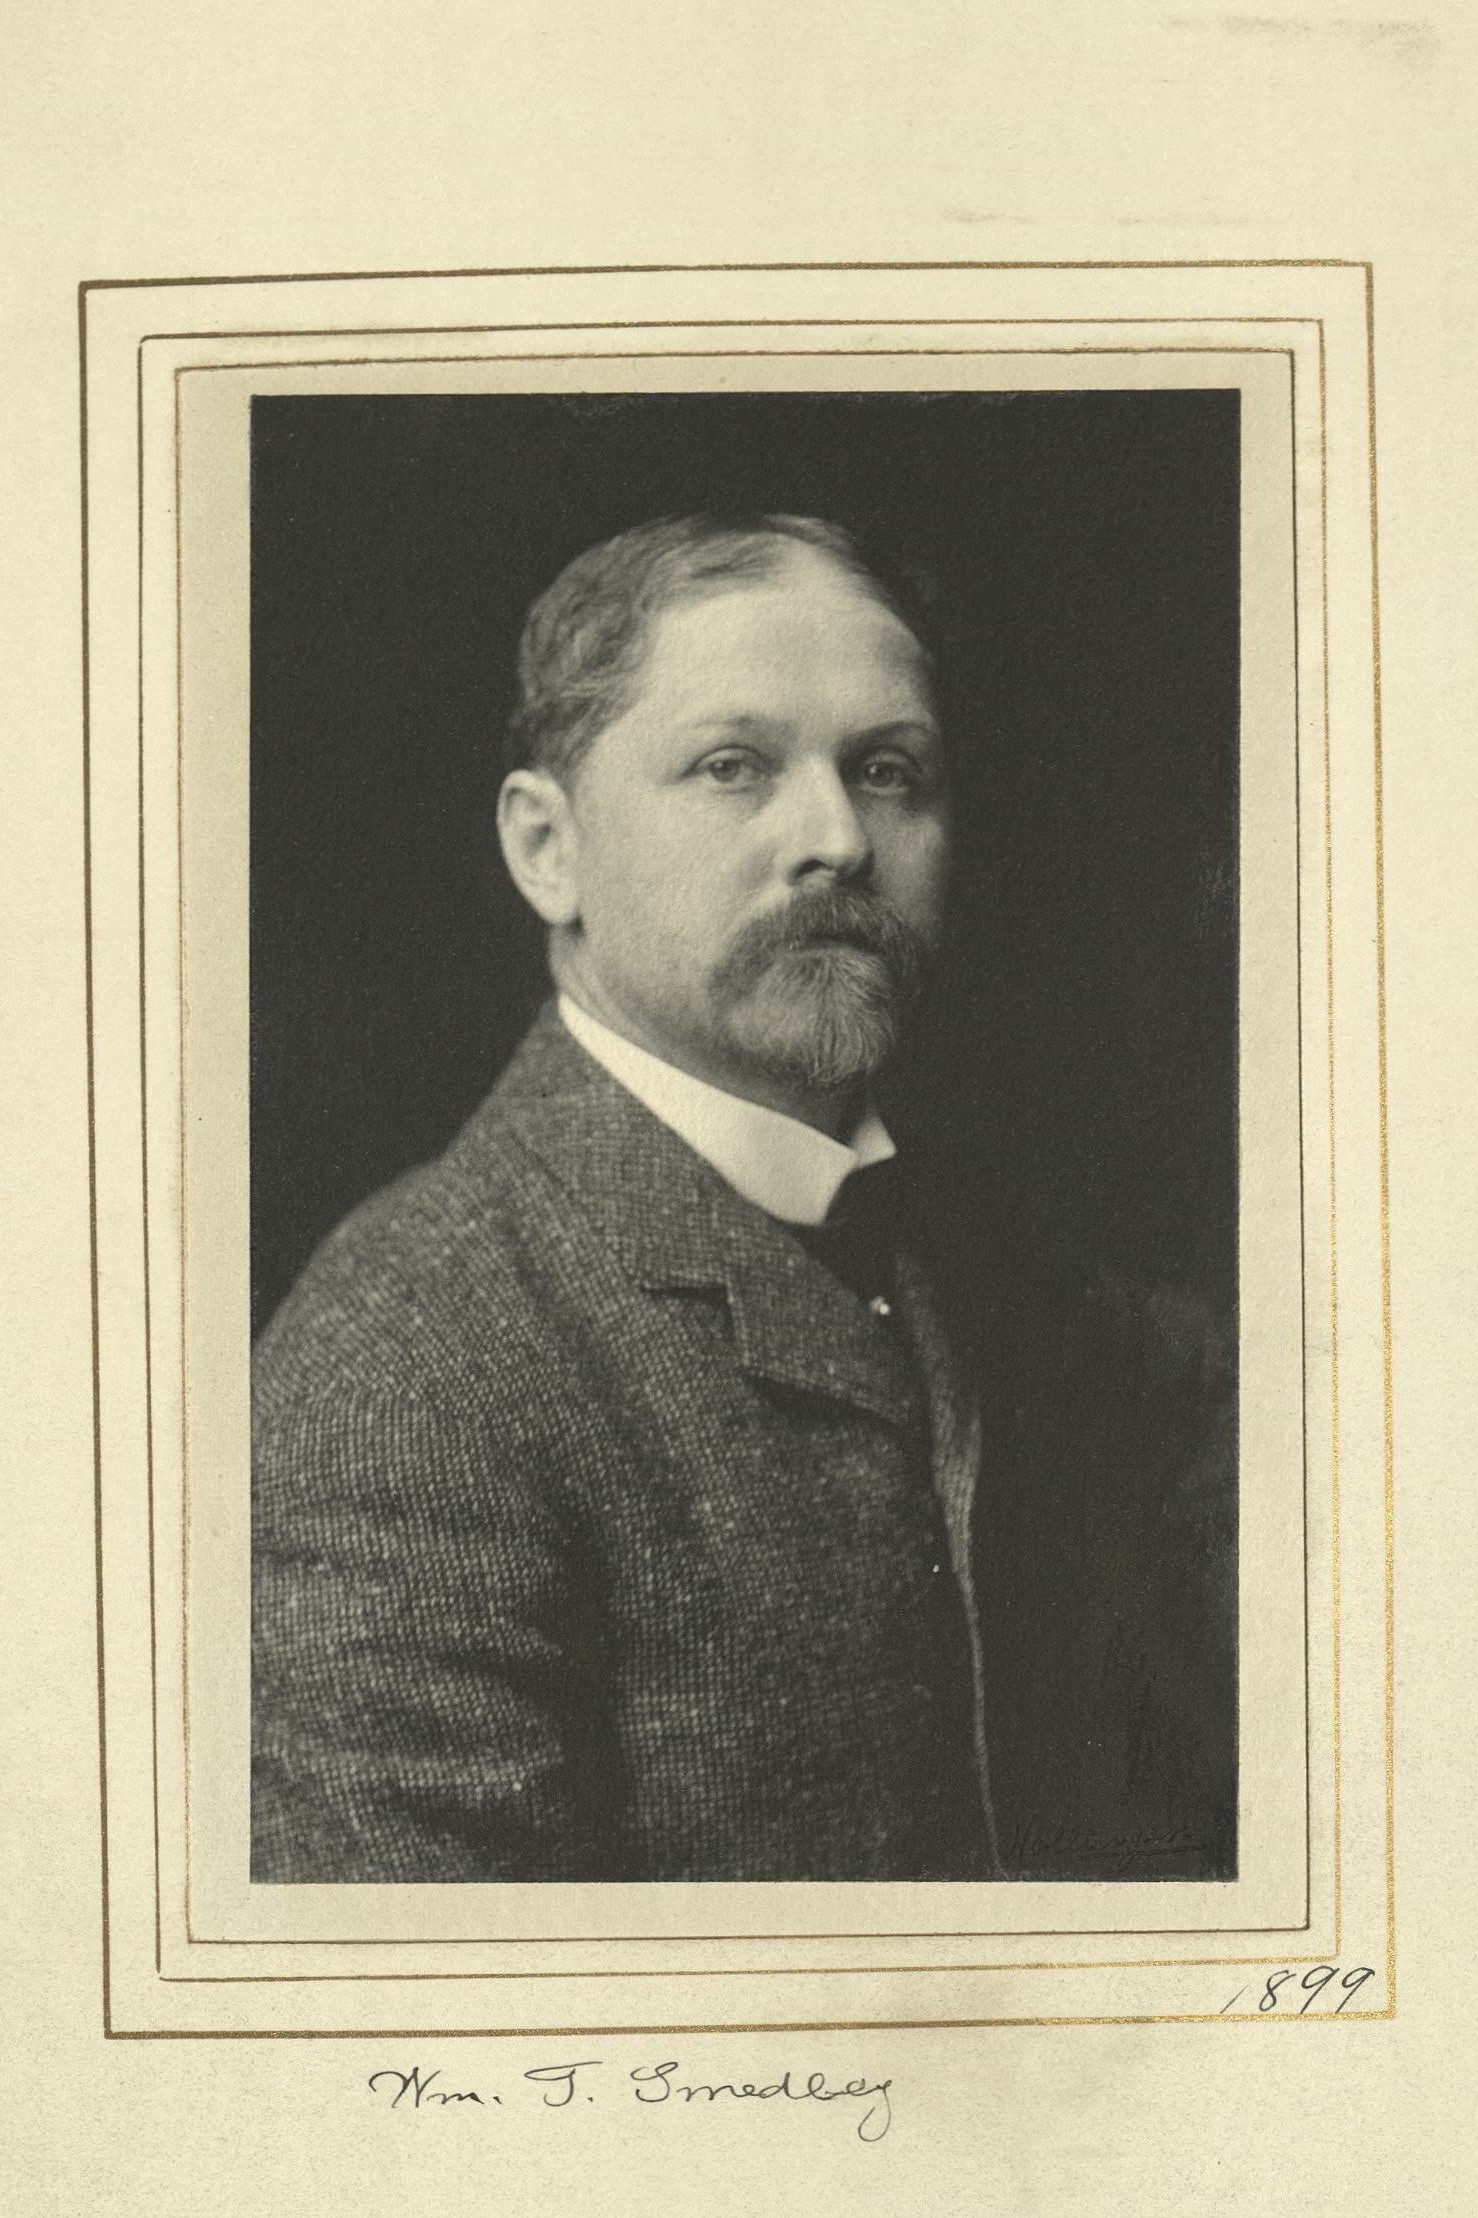 Member portrait of William T. Smedley